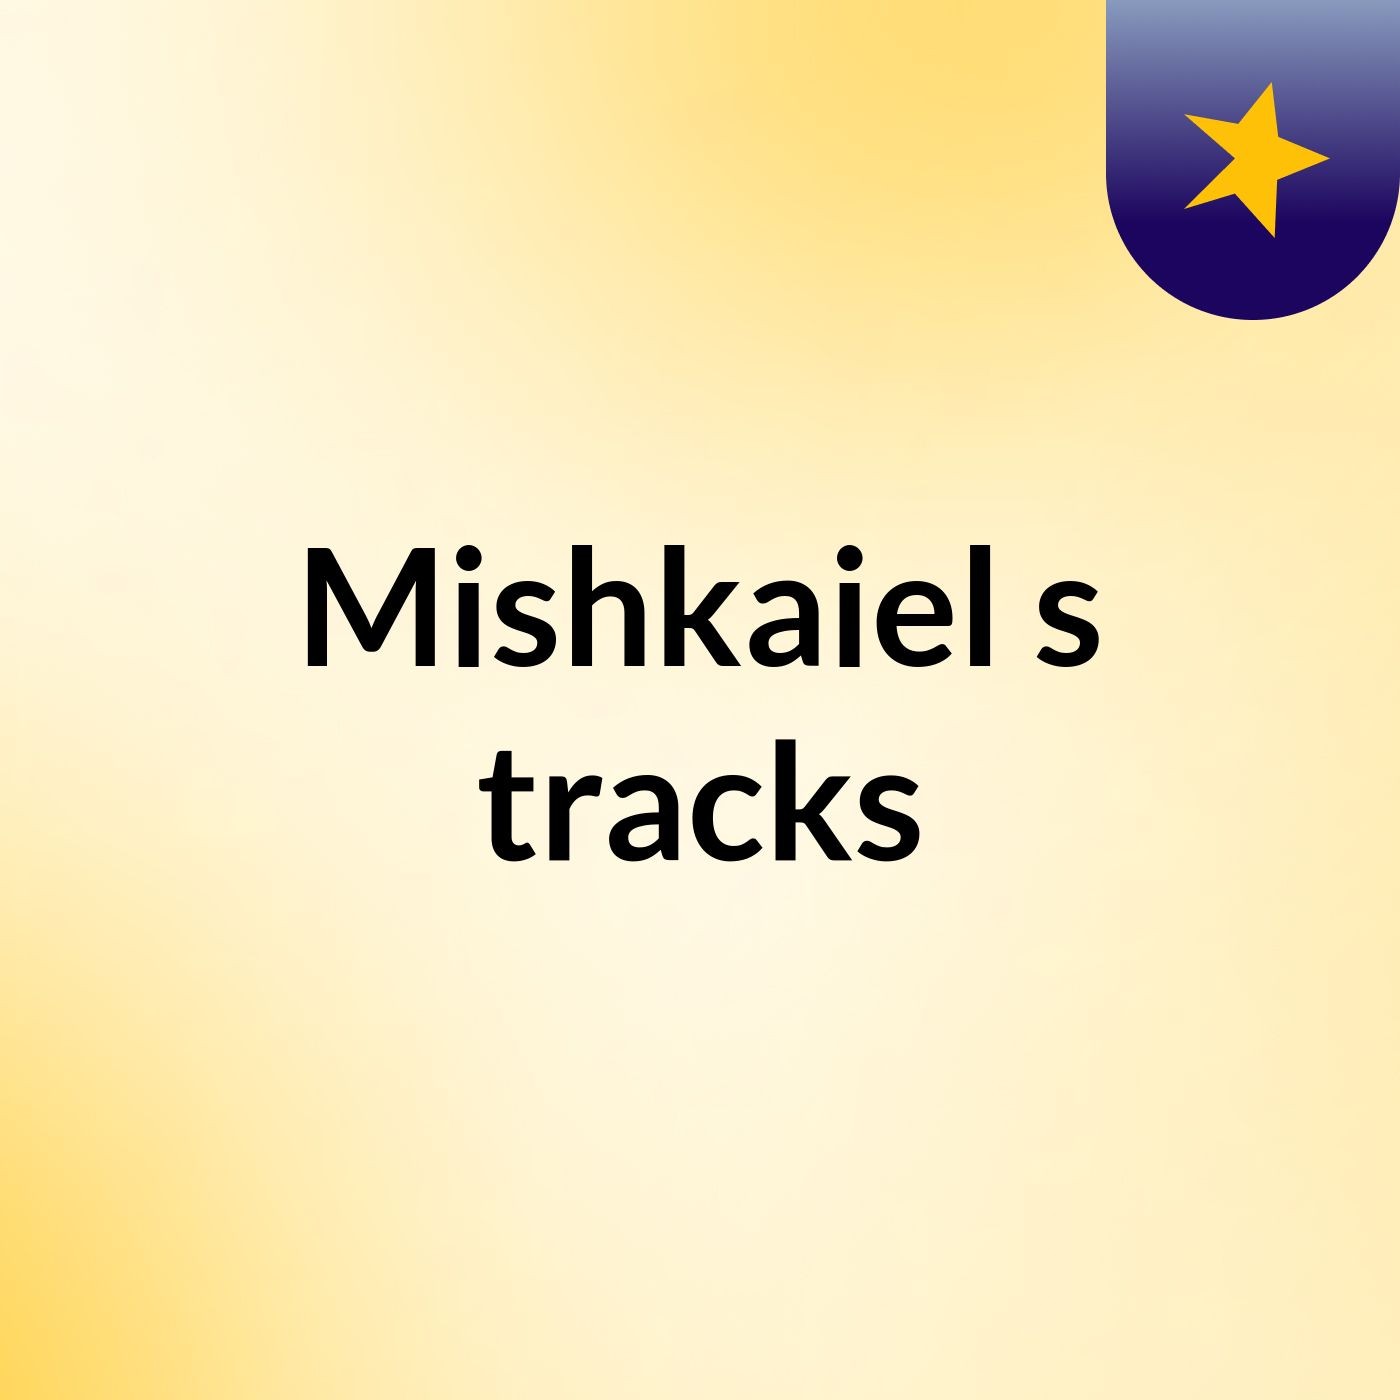 Mishkaiel's tracks